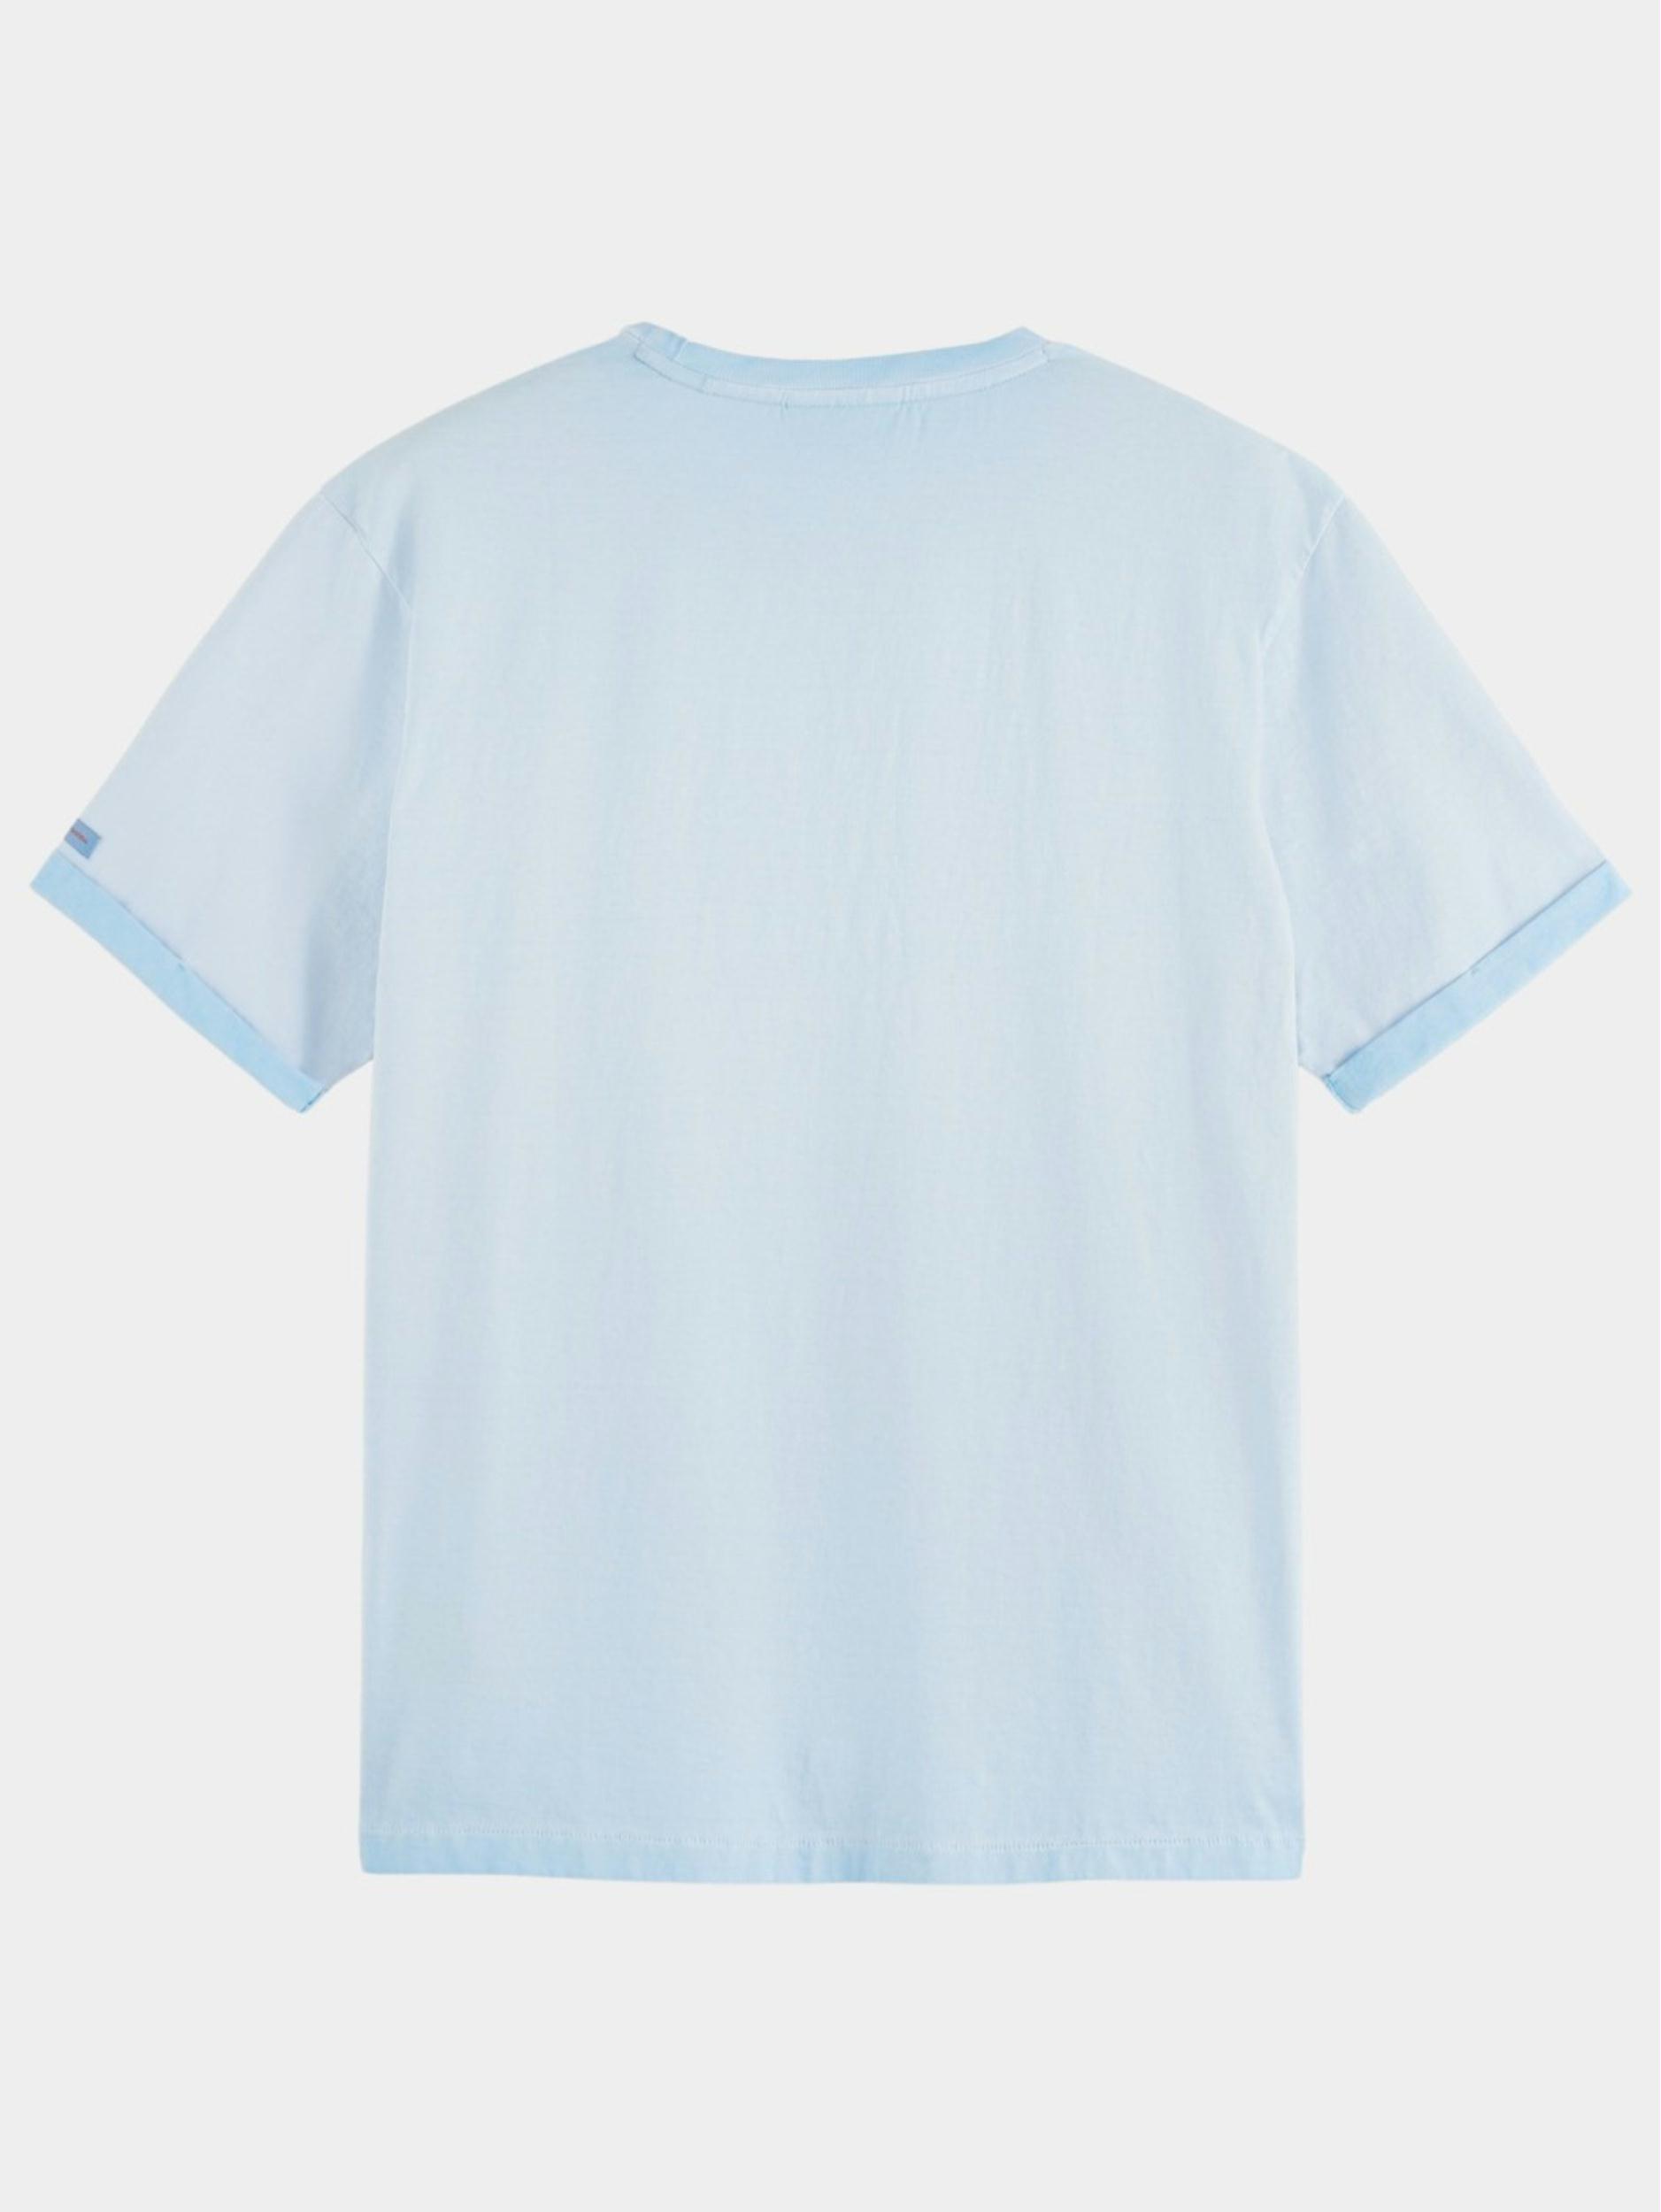 Scotch & Soda T-shirt korte mouw Blauw Cold dye tee with chest artwor 171703/5609